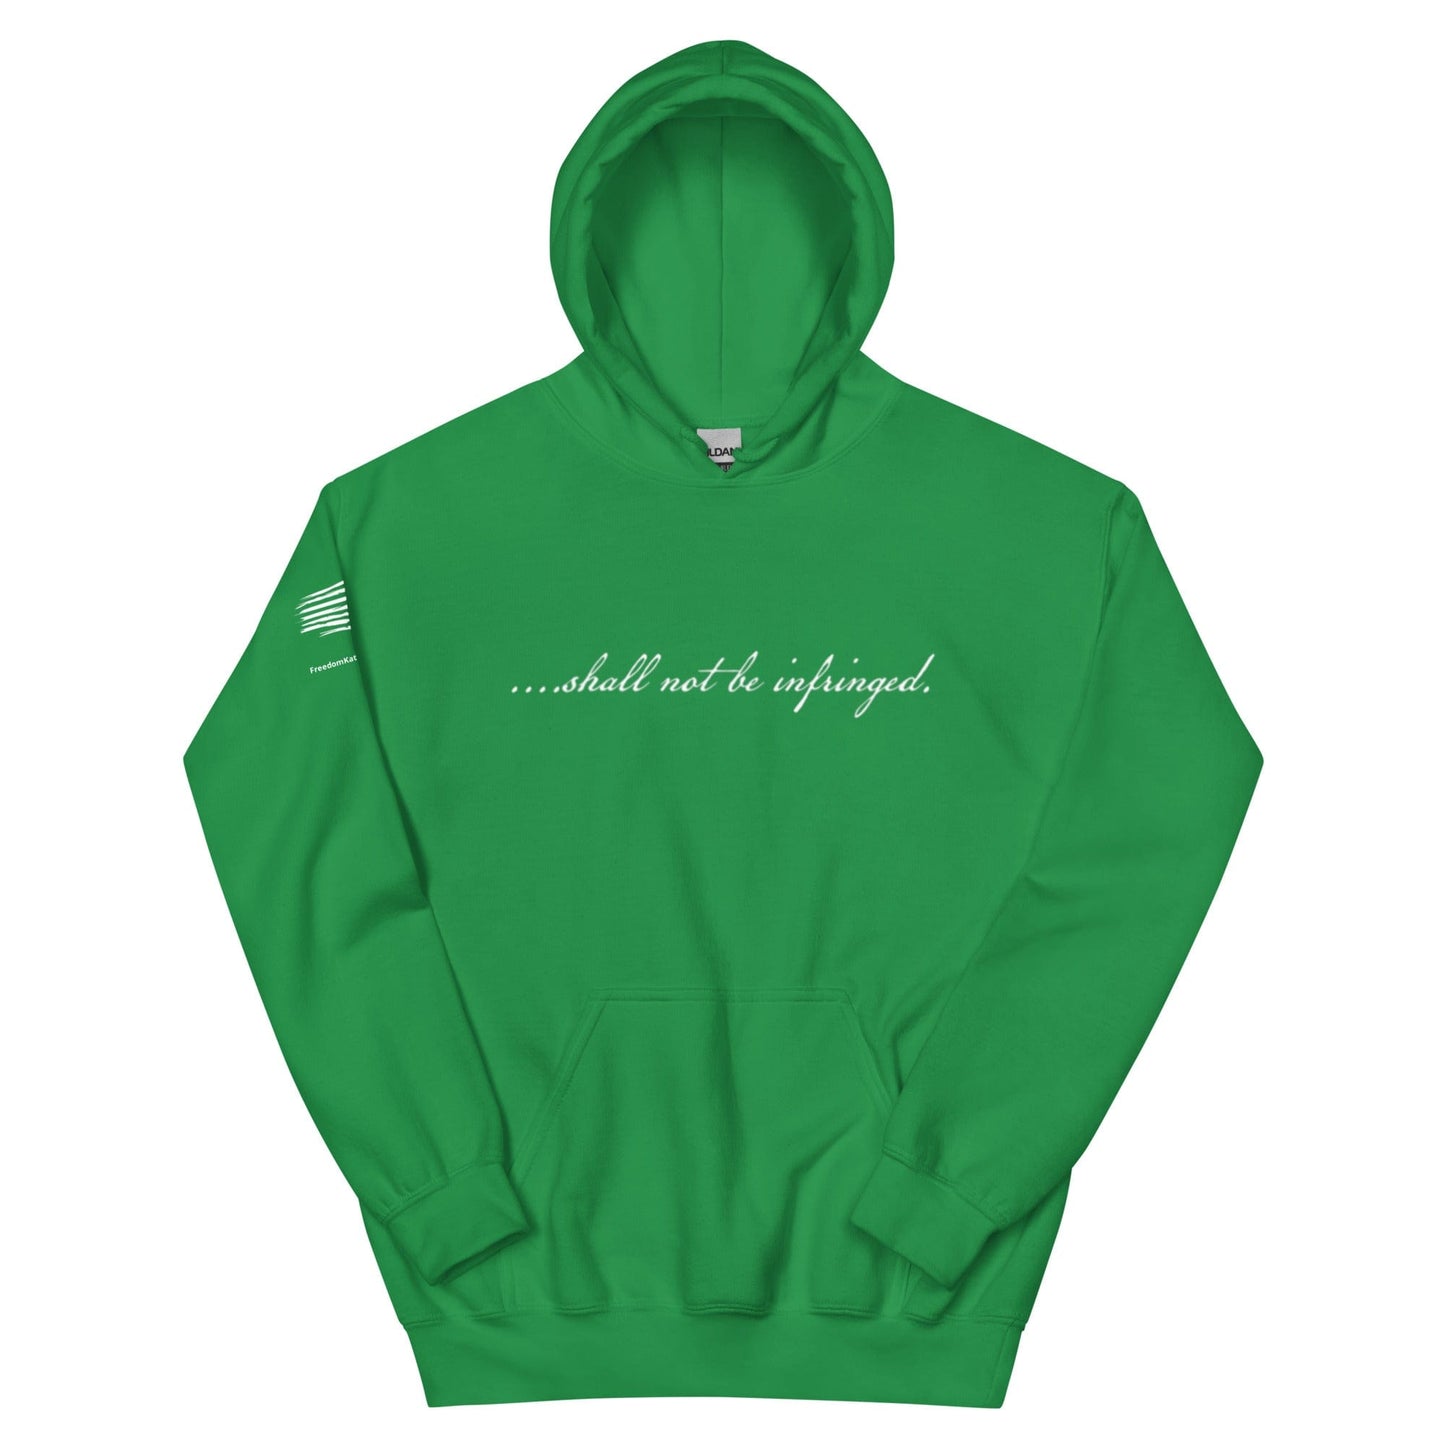 FreedomKat Designs Hoodie Irish Green / S Shall Not Be Infringed Hoodie